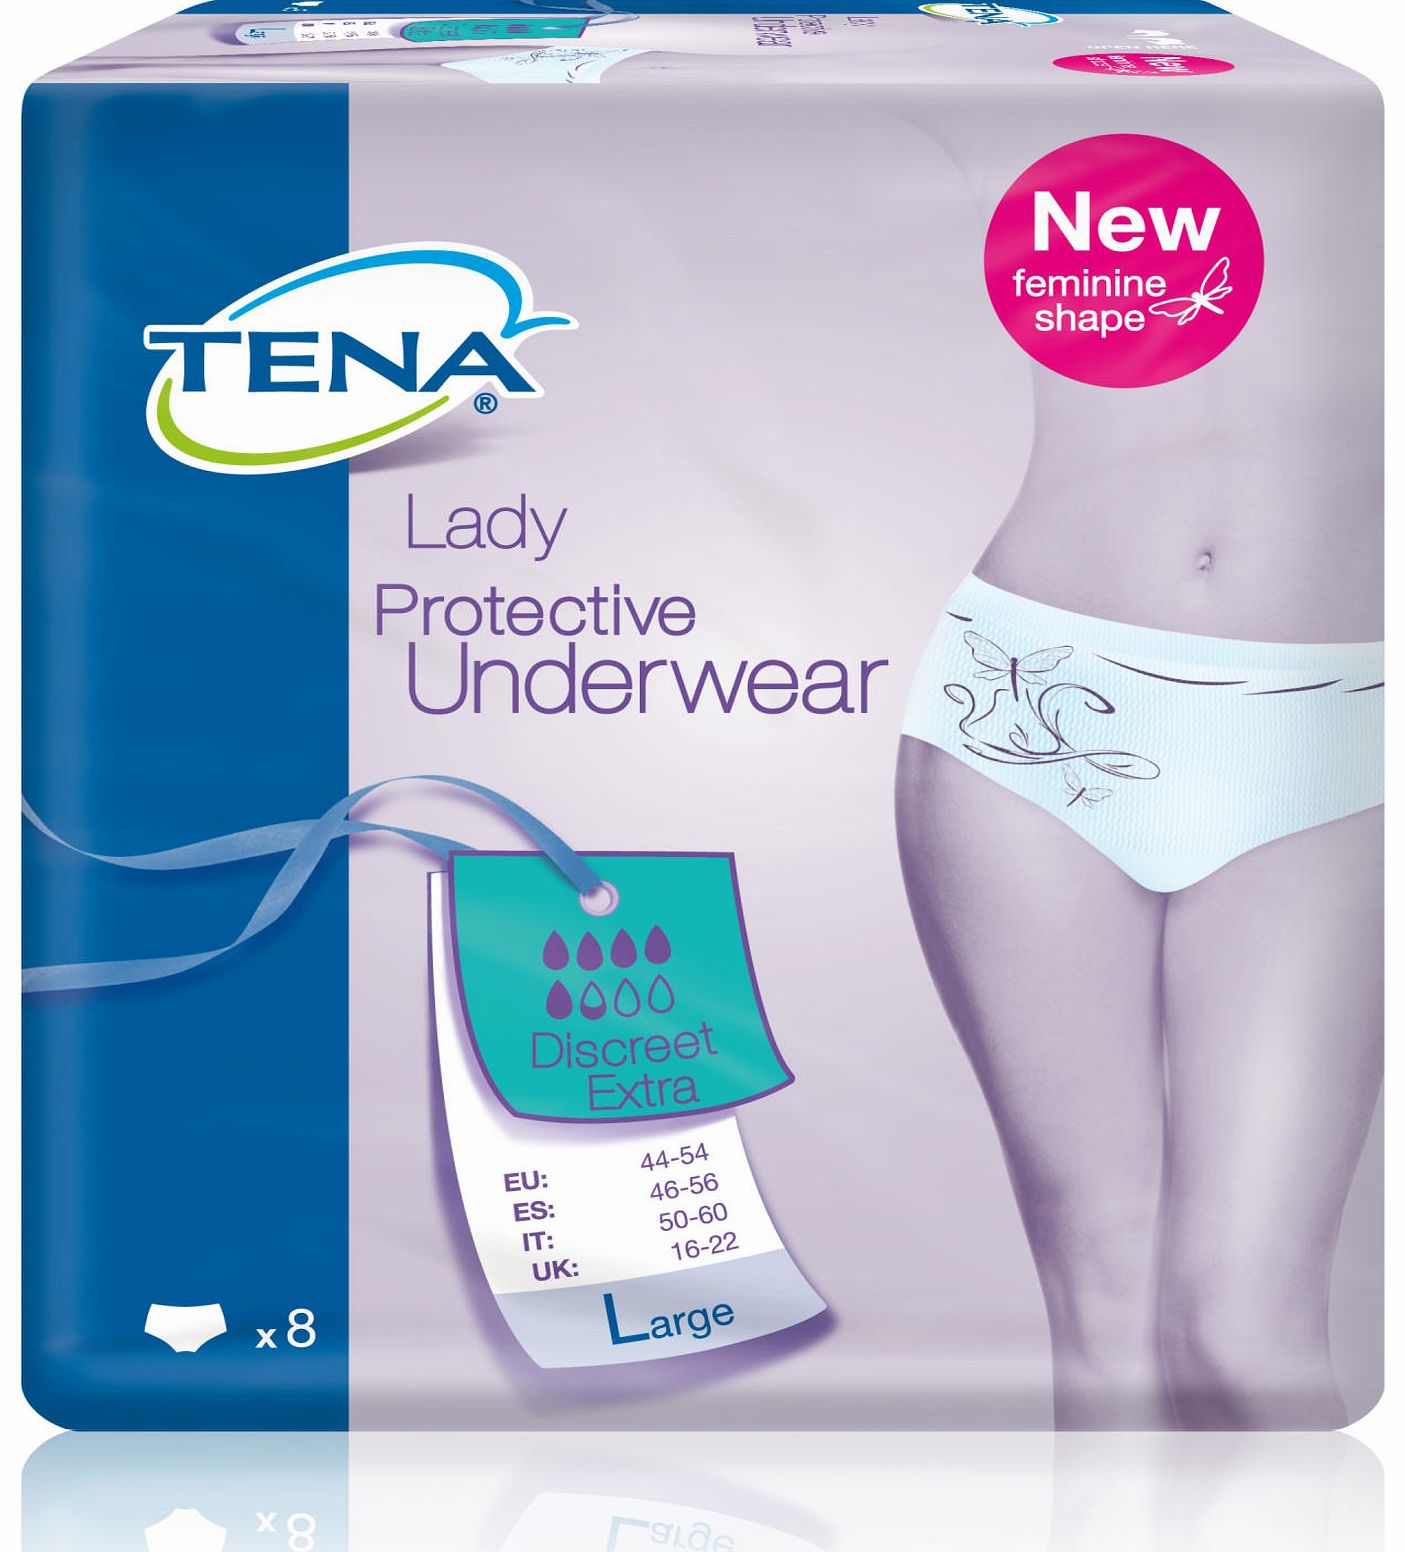 Tena Lady Protective Underwear Discreet Extra